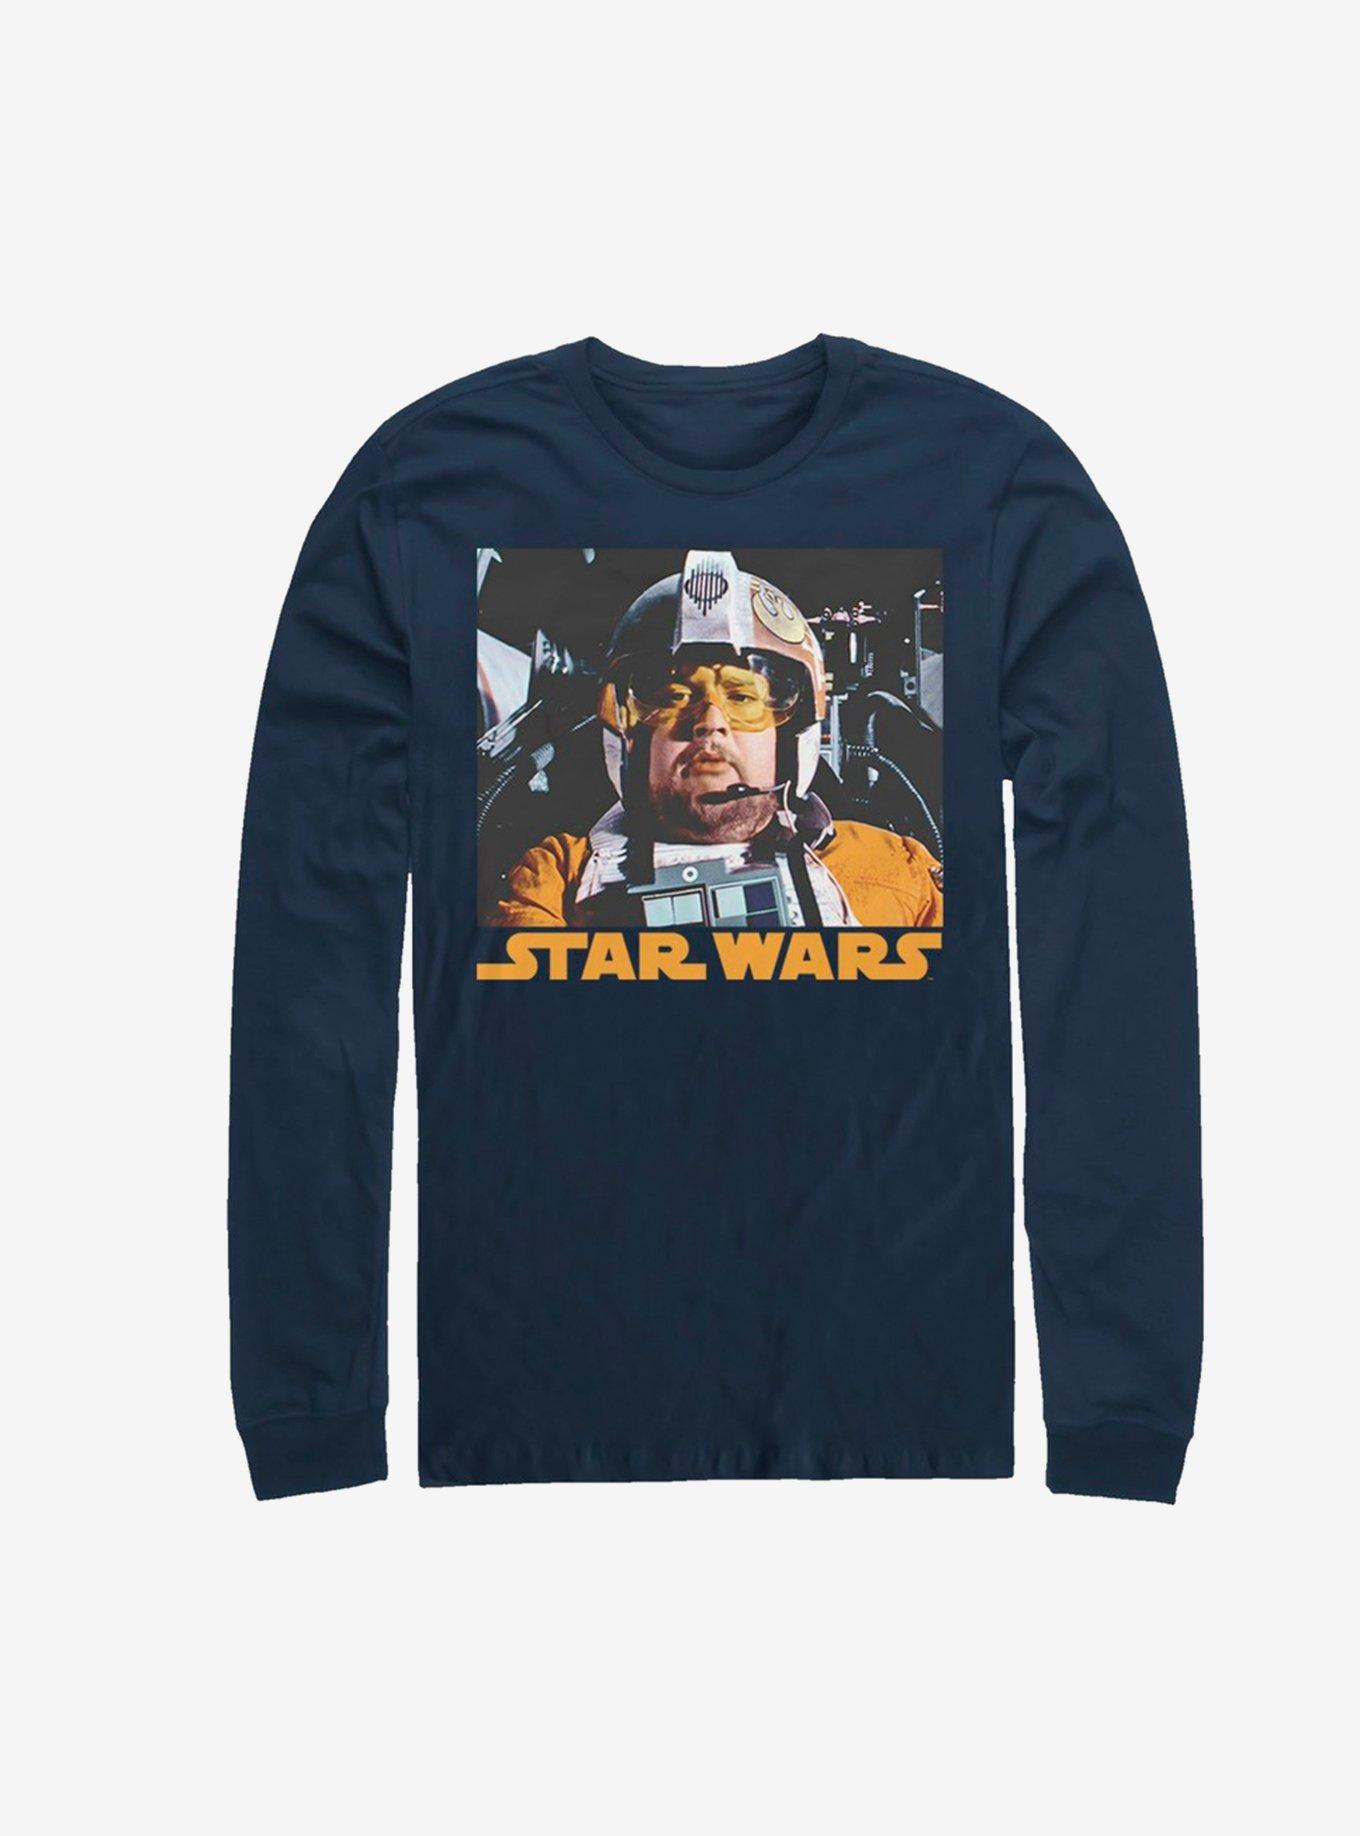 Star Wars Porkins Long-Sleeve T-Shirt, NAVY, hi-res